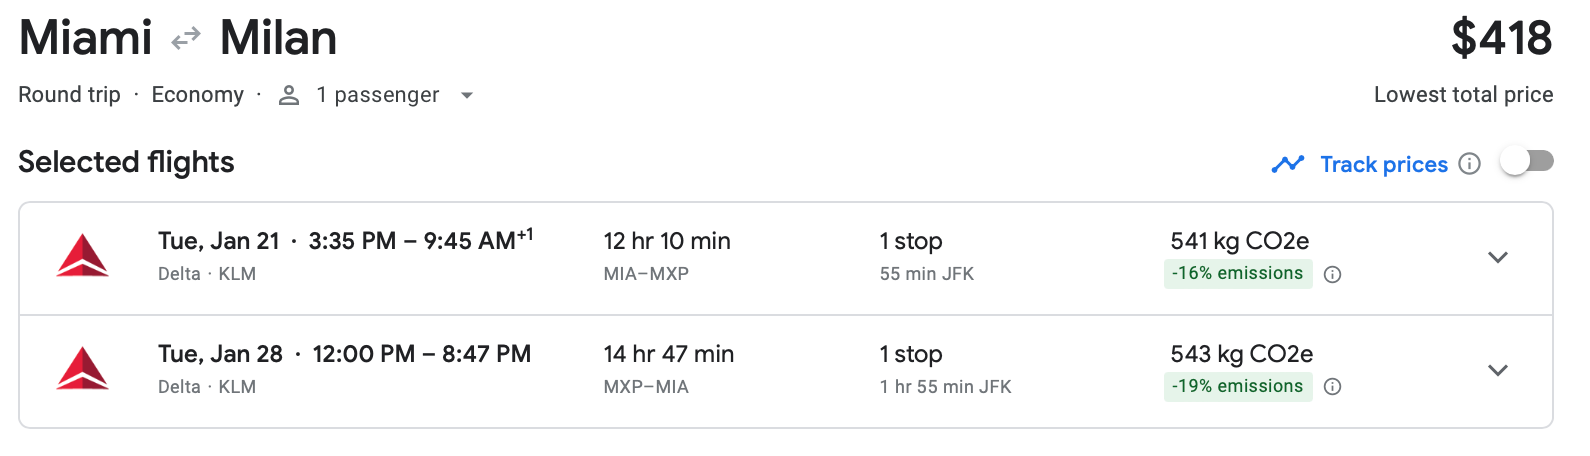 Google Flights estimate for roundtrip flight from Miami to Milan